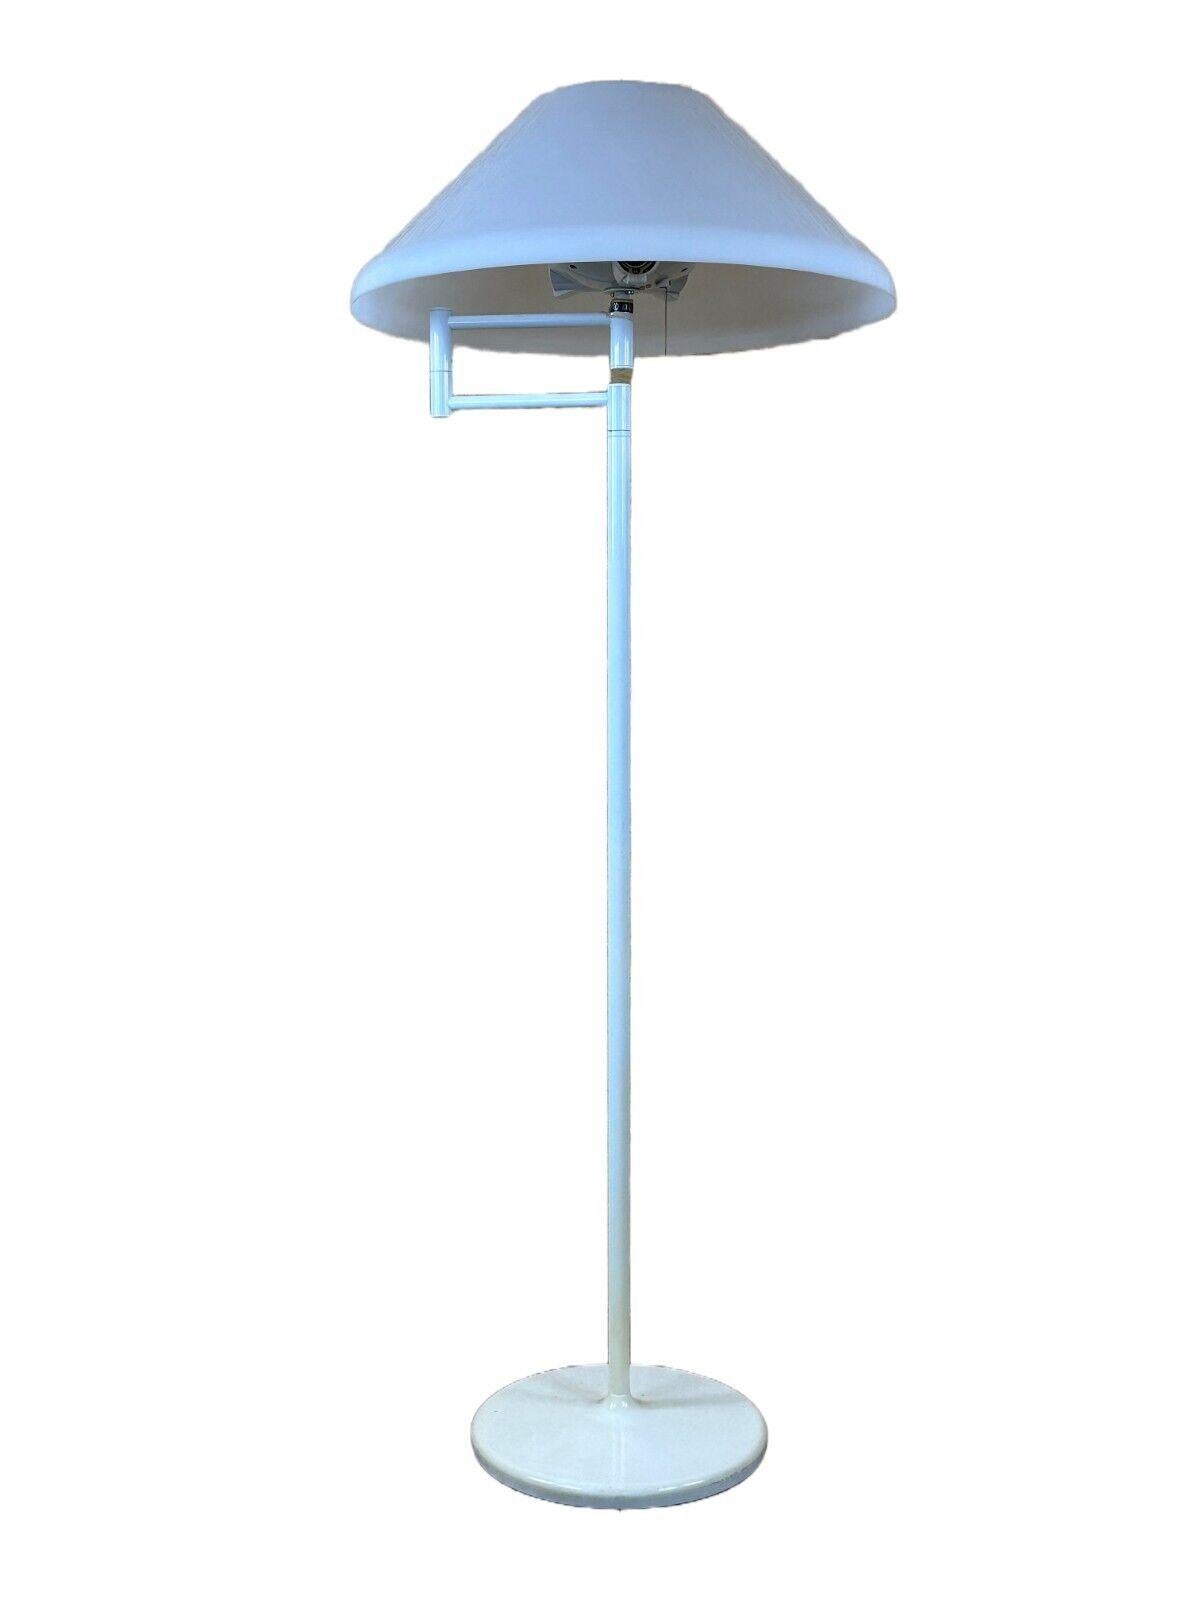 60s 70s adjustable floor lamp Swiss Lamps International Switzerland metal

Object: floor lamp

Manufacturer: Swiss Lamps International

Condition: good - vintage

Age: around 1960-1970

Dimensions:

Diameter = 57cm
Height = 145cm

Material: metal,